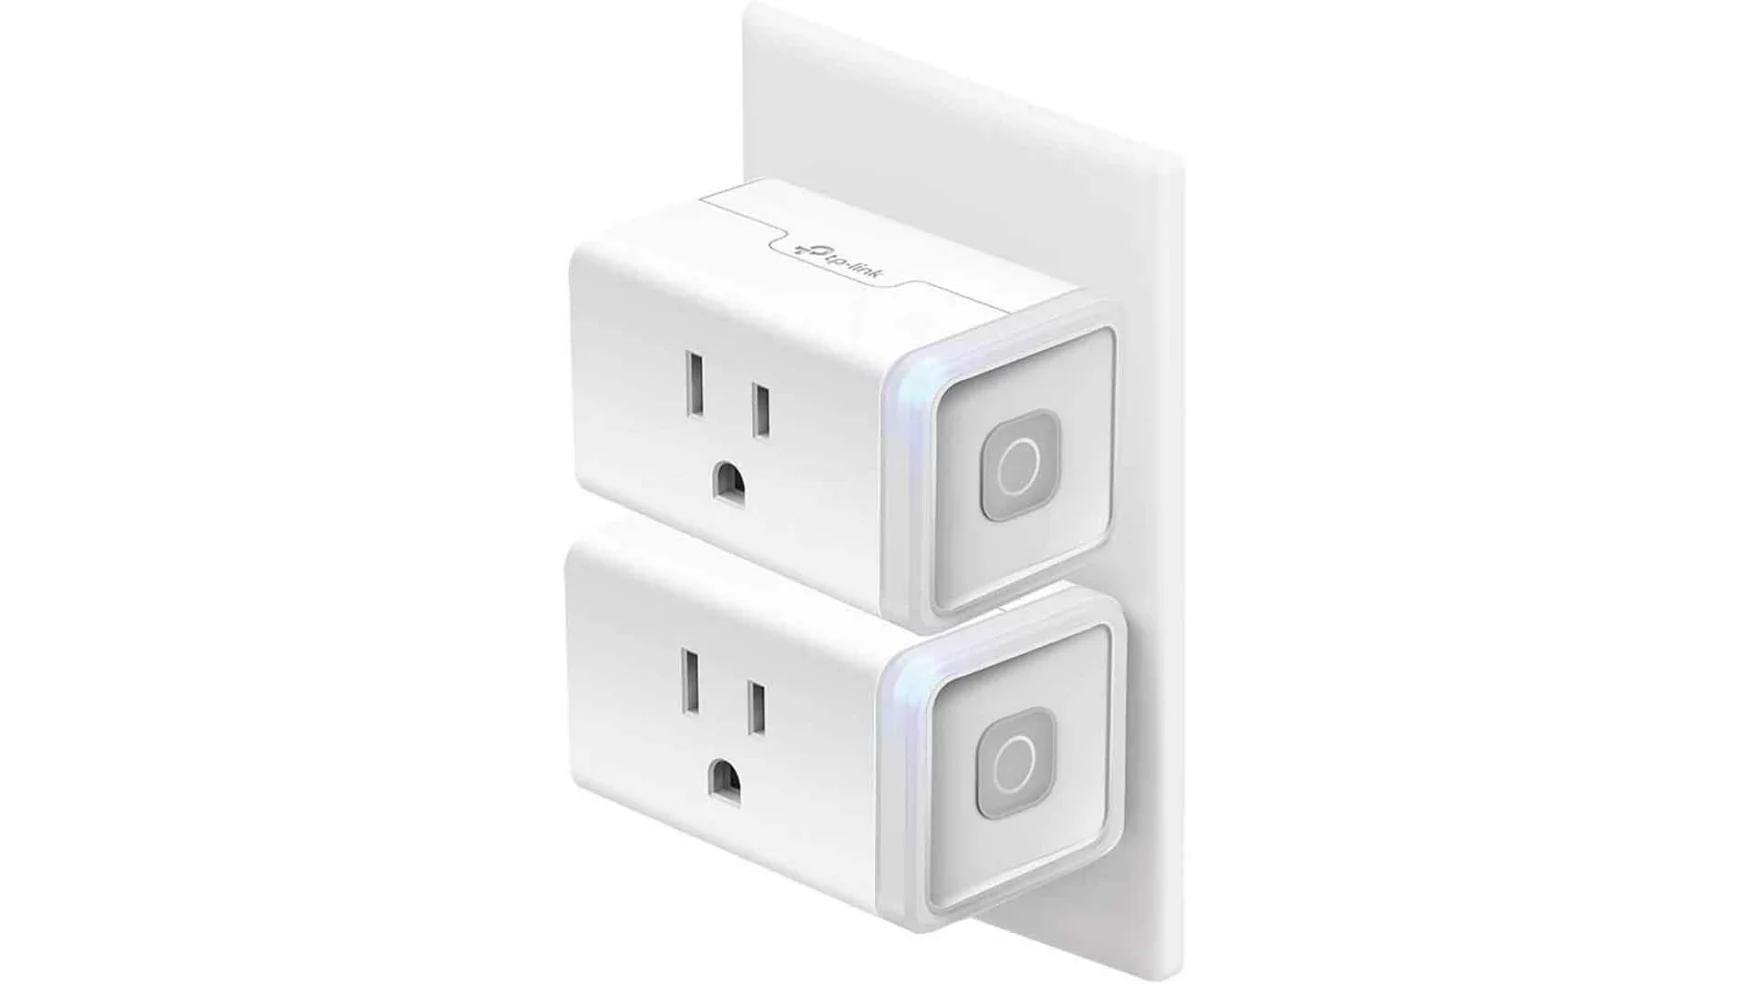 Kasa Mini smart plugs